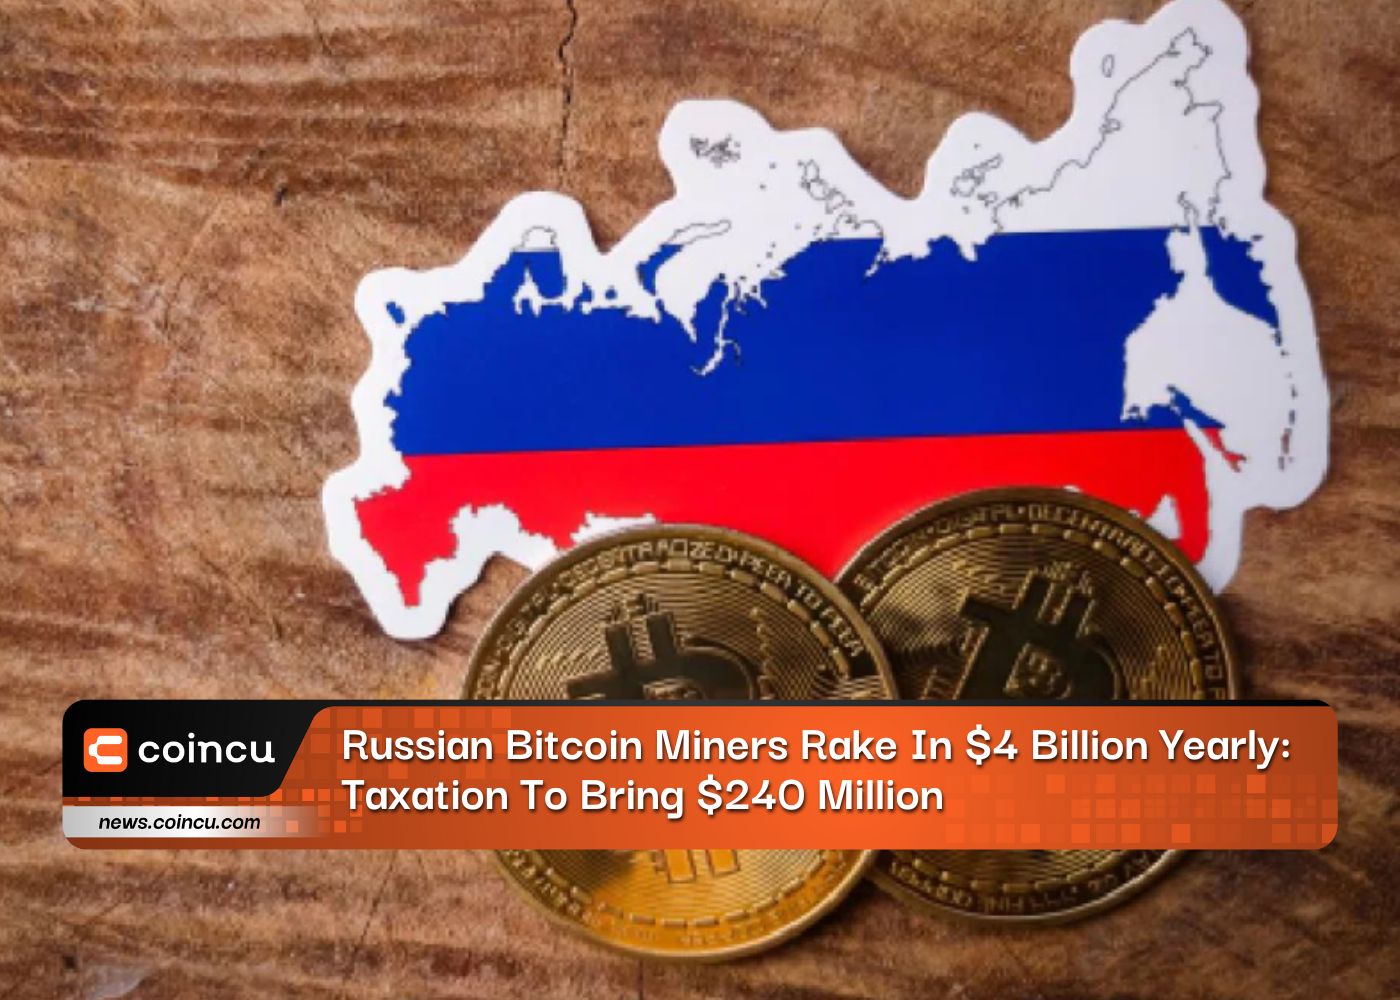 Russian Bitcoin Miners Rake In $4 Billion Yearly: Taxation To Bring $240 Million